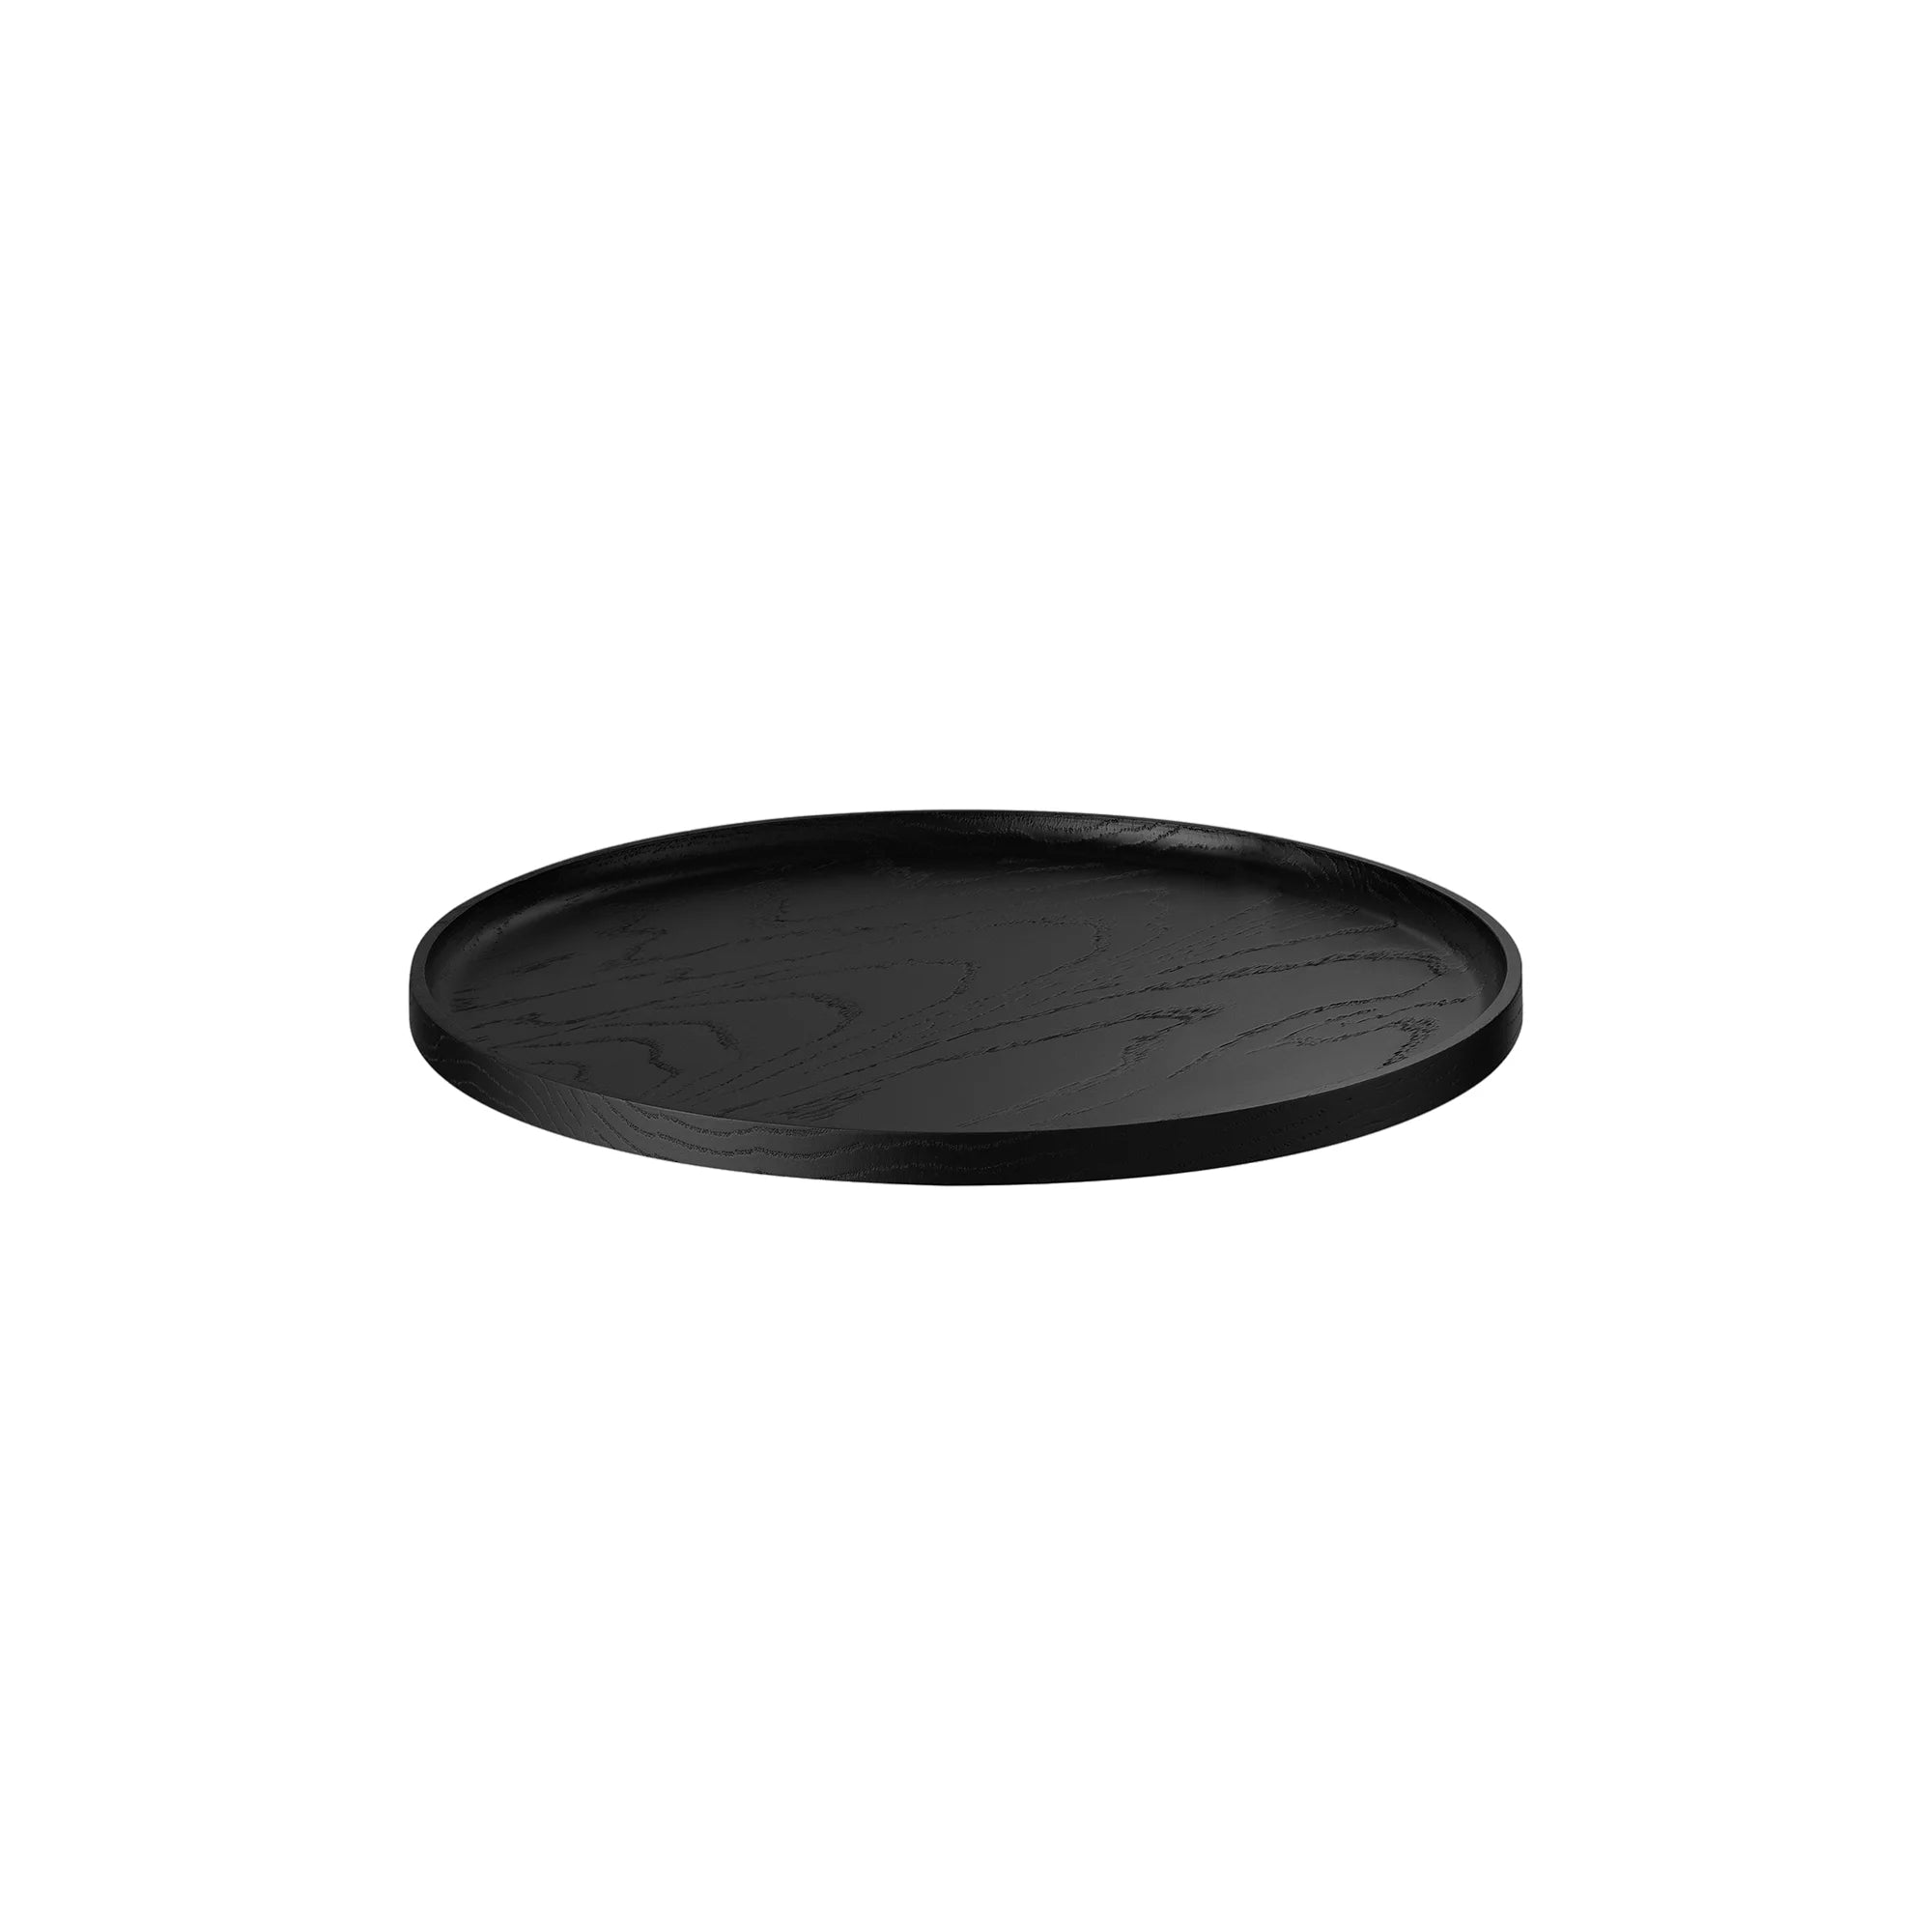 OKU Serving tray - Color Black Size Medium